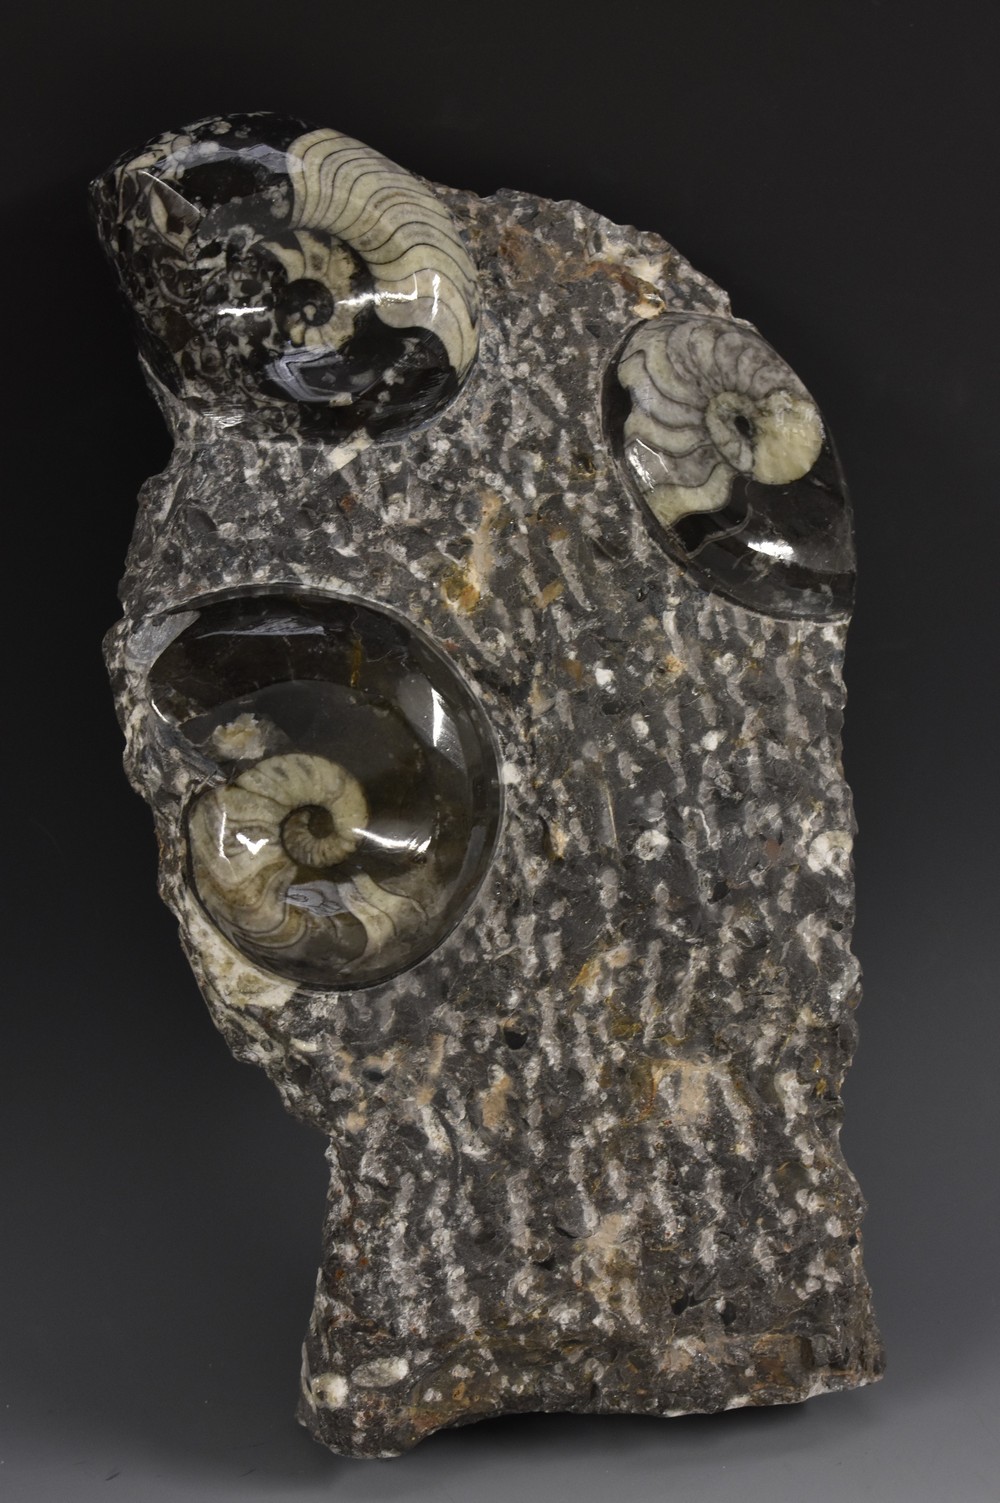 Natural History - a fossil specimen, Goniatite,